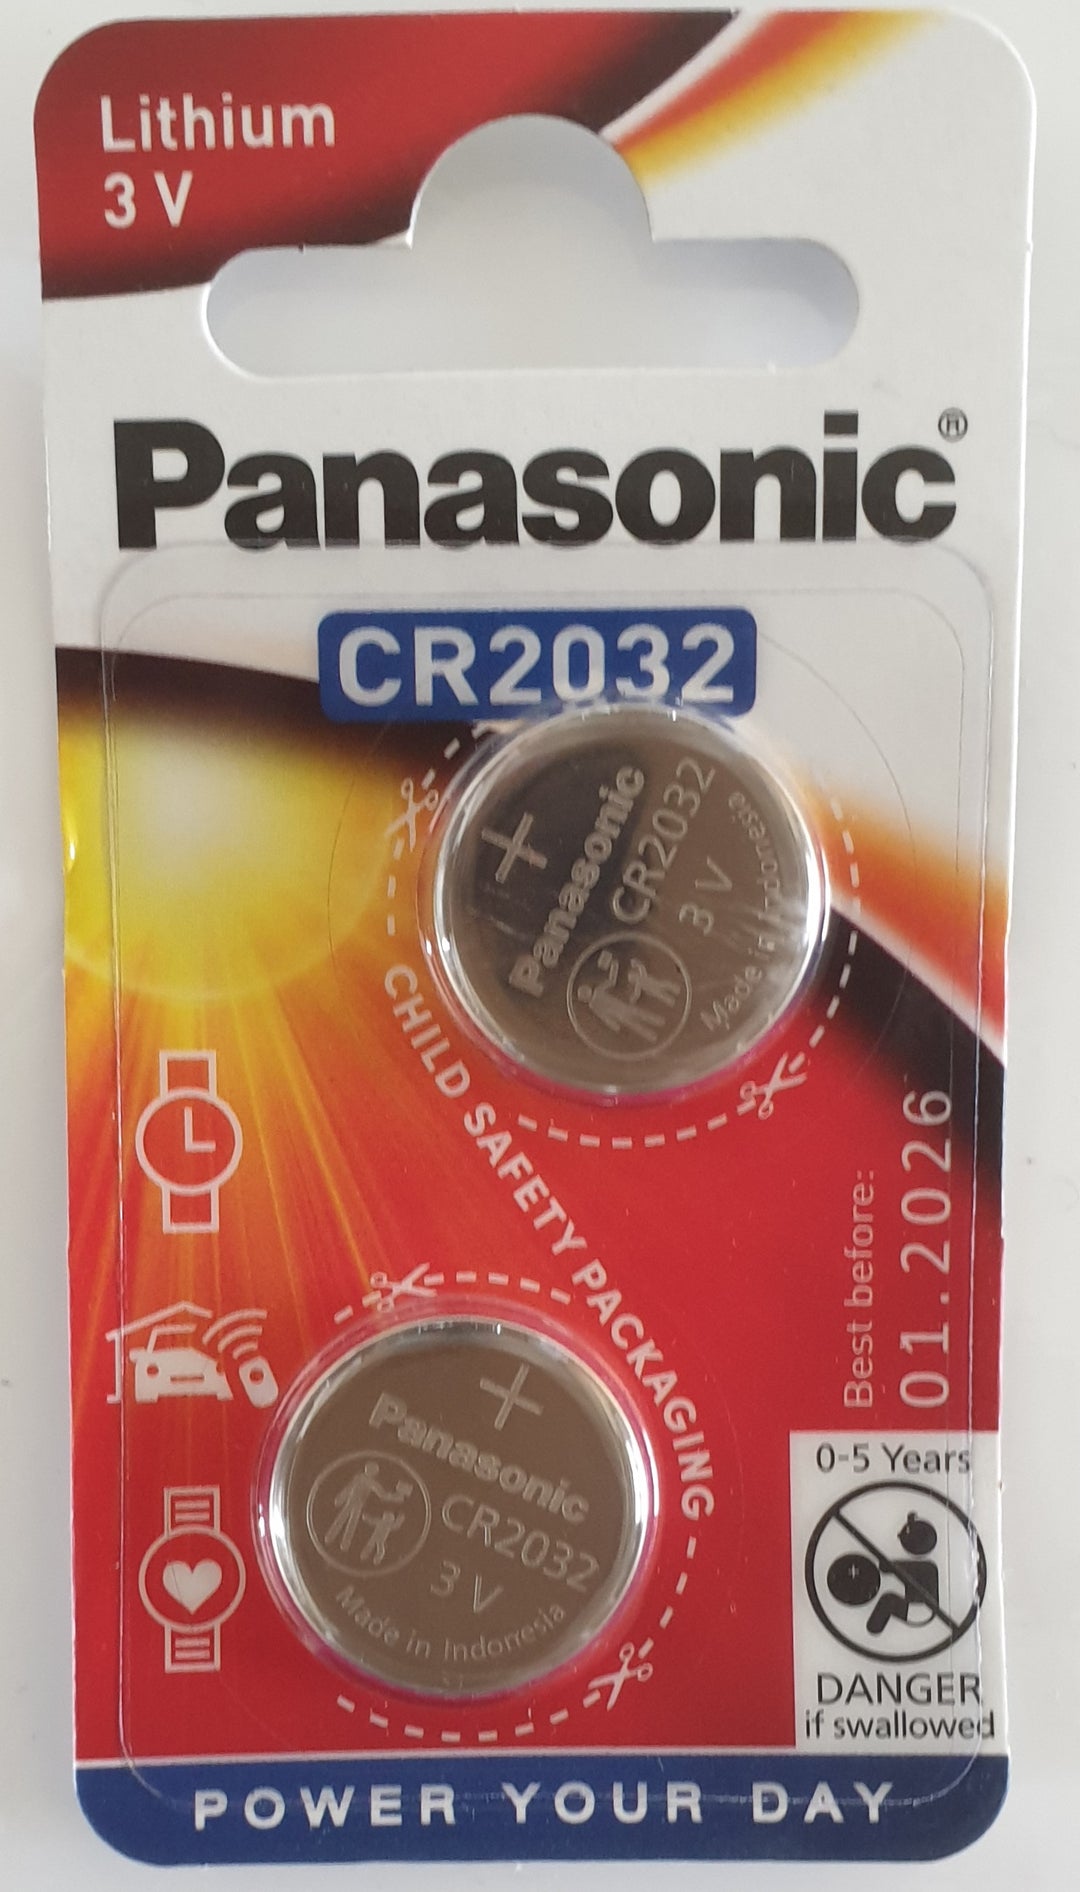 Panasonic CR2032 Lithium 3V Coin Batteries (2 pack)